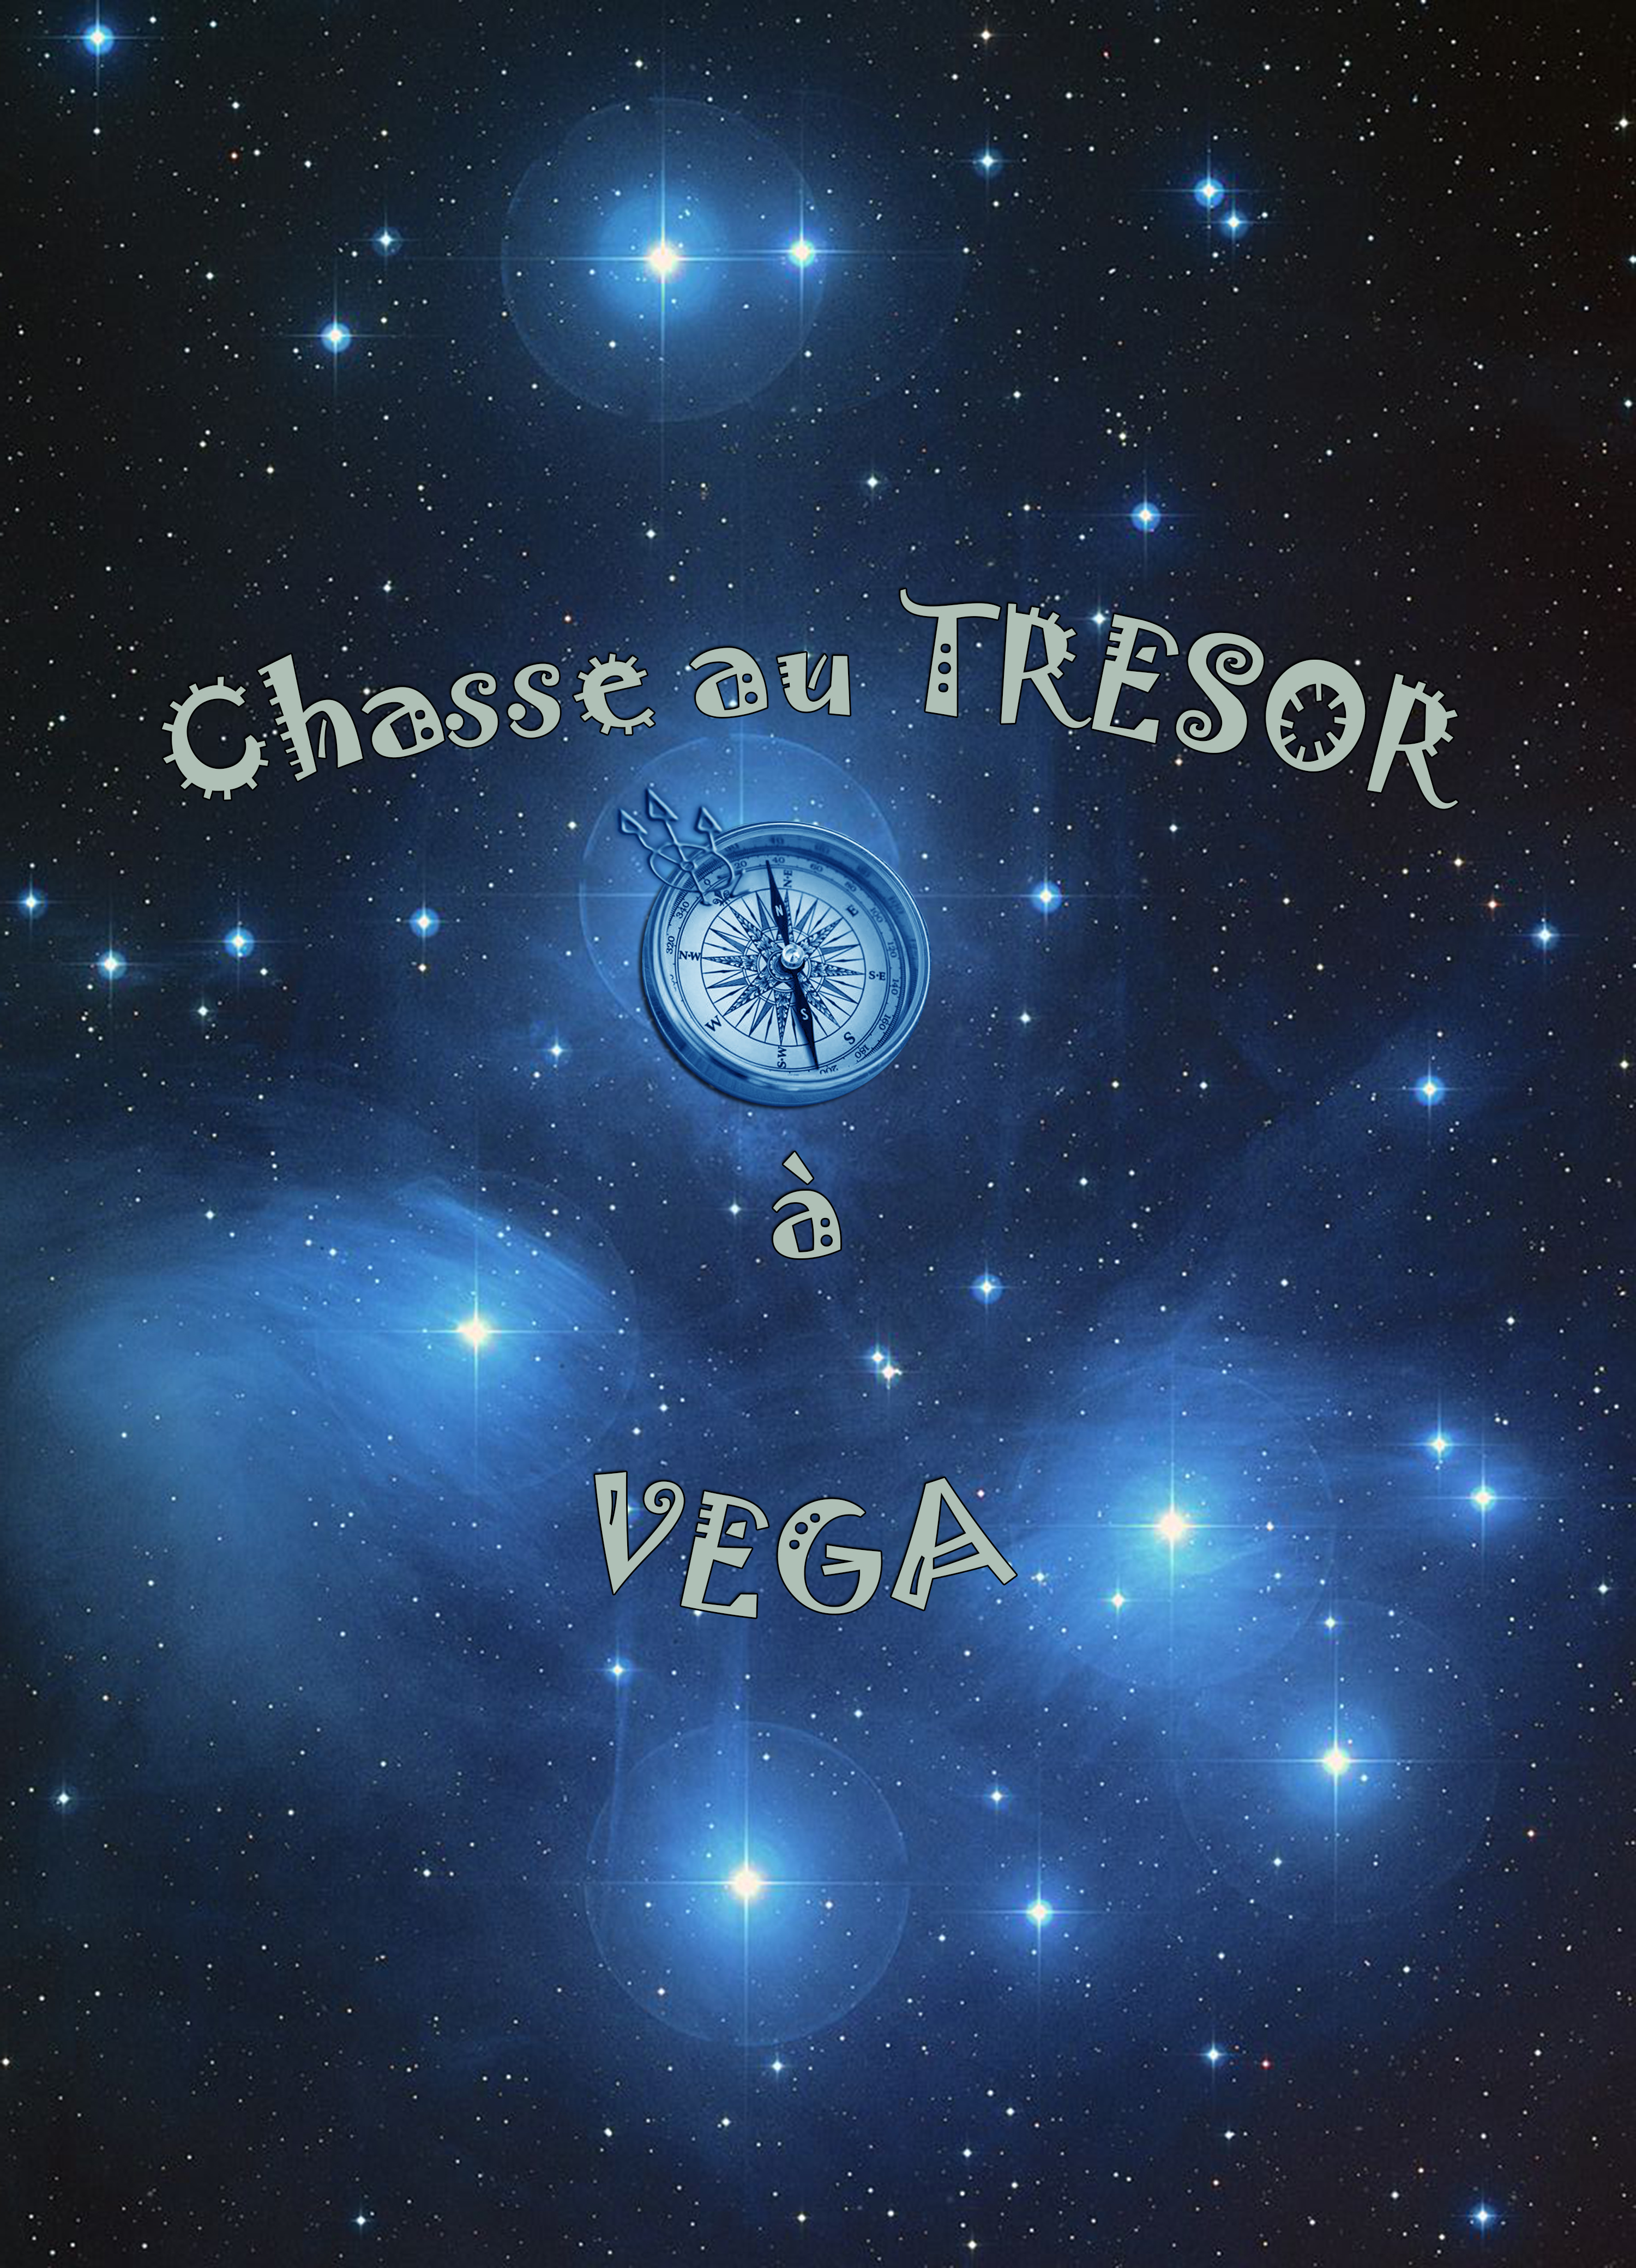 Site Chasse au TResor a vega 4.jpg